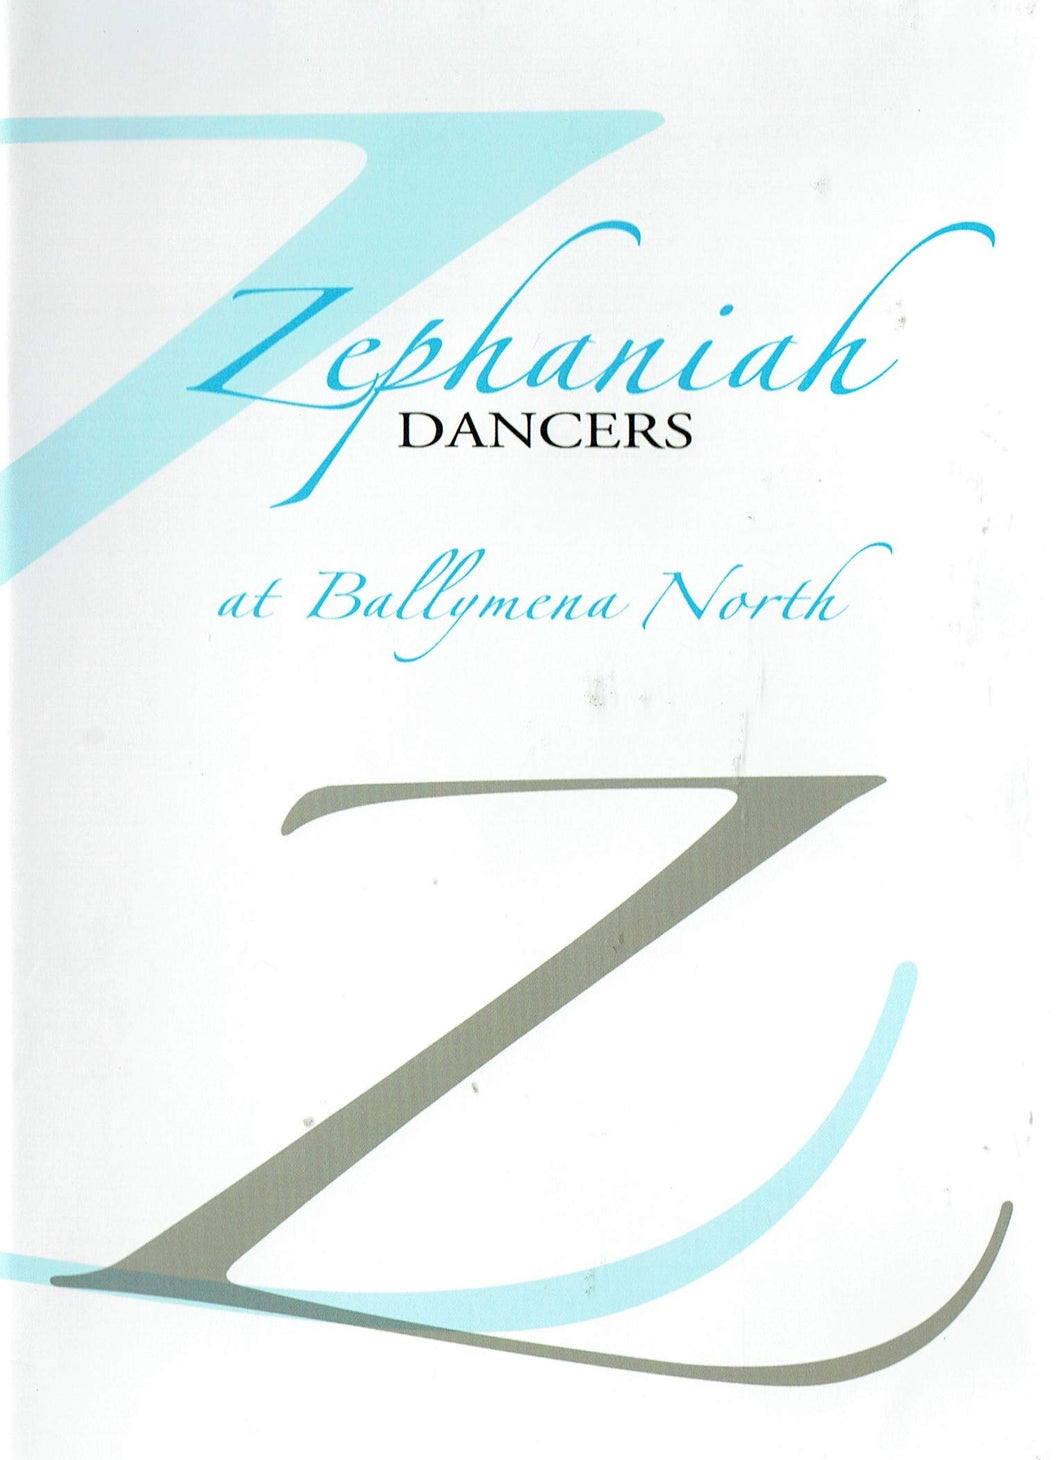 Zephaniah Dancers at Ballymena North